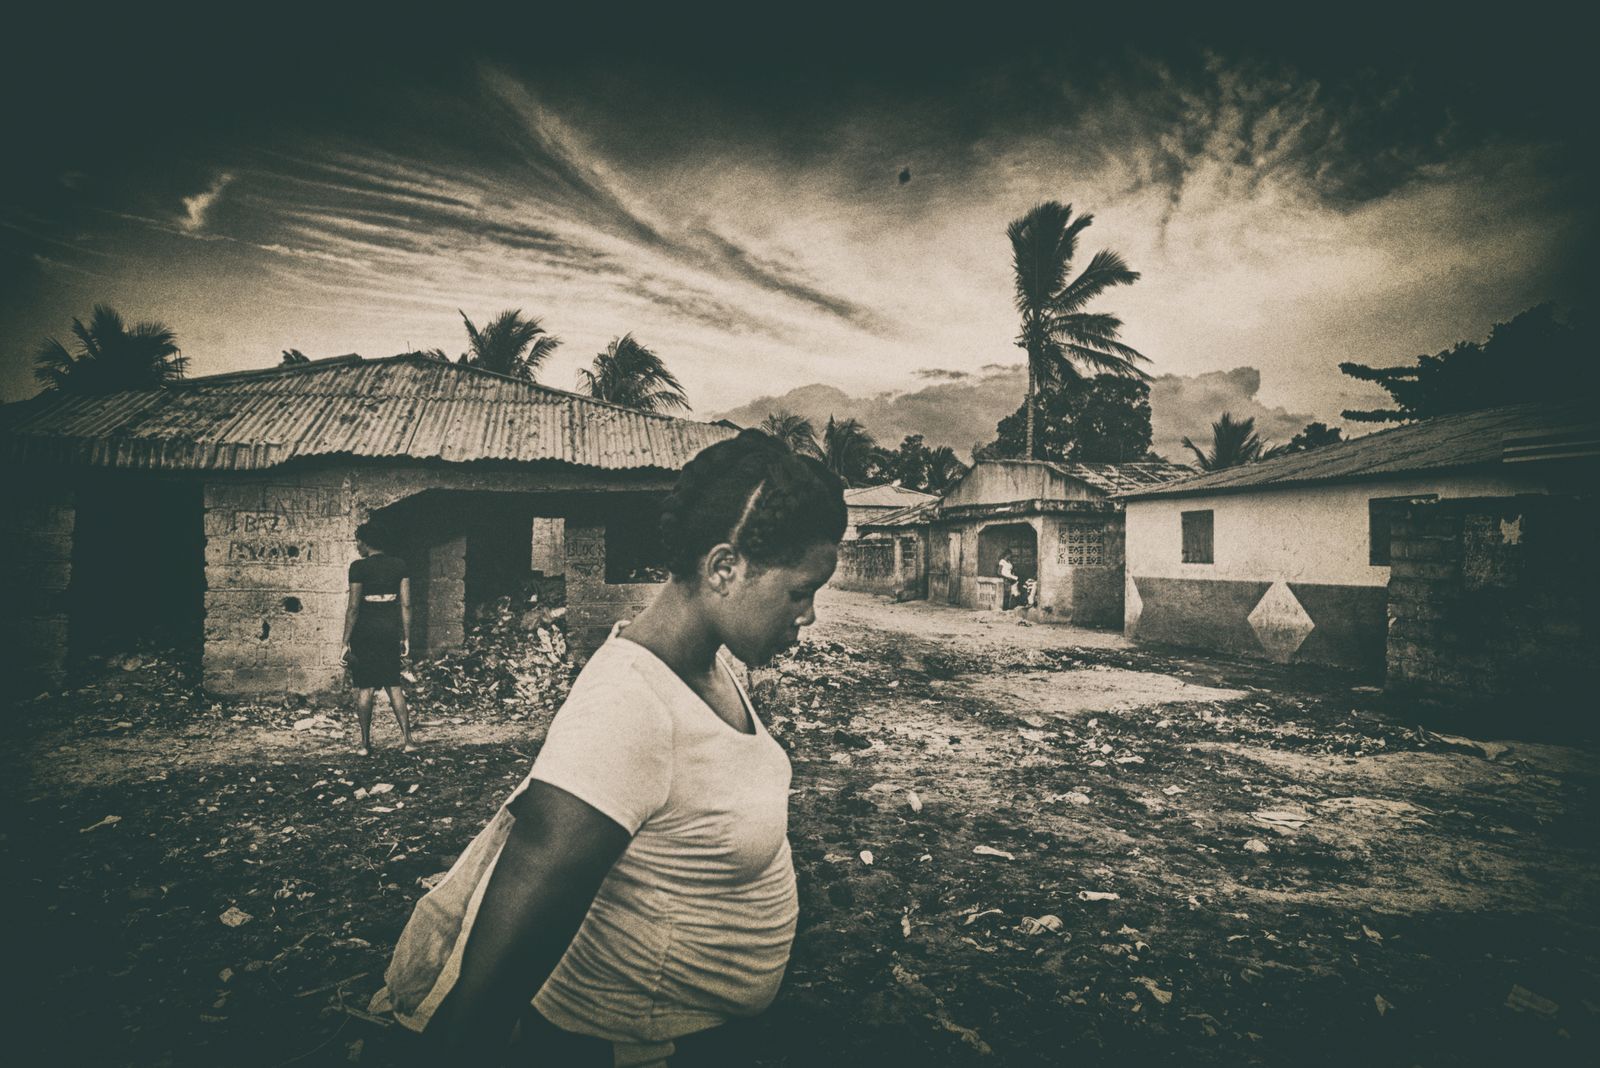 © Edoardo Agresti - Image from the Haiti, Postcards from the border photography project